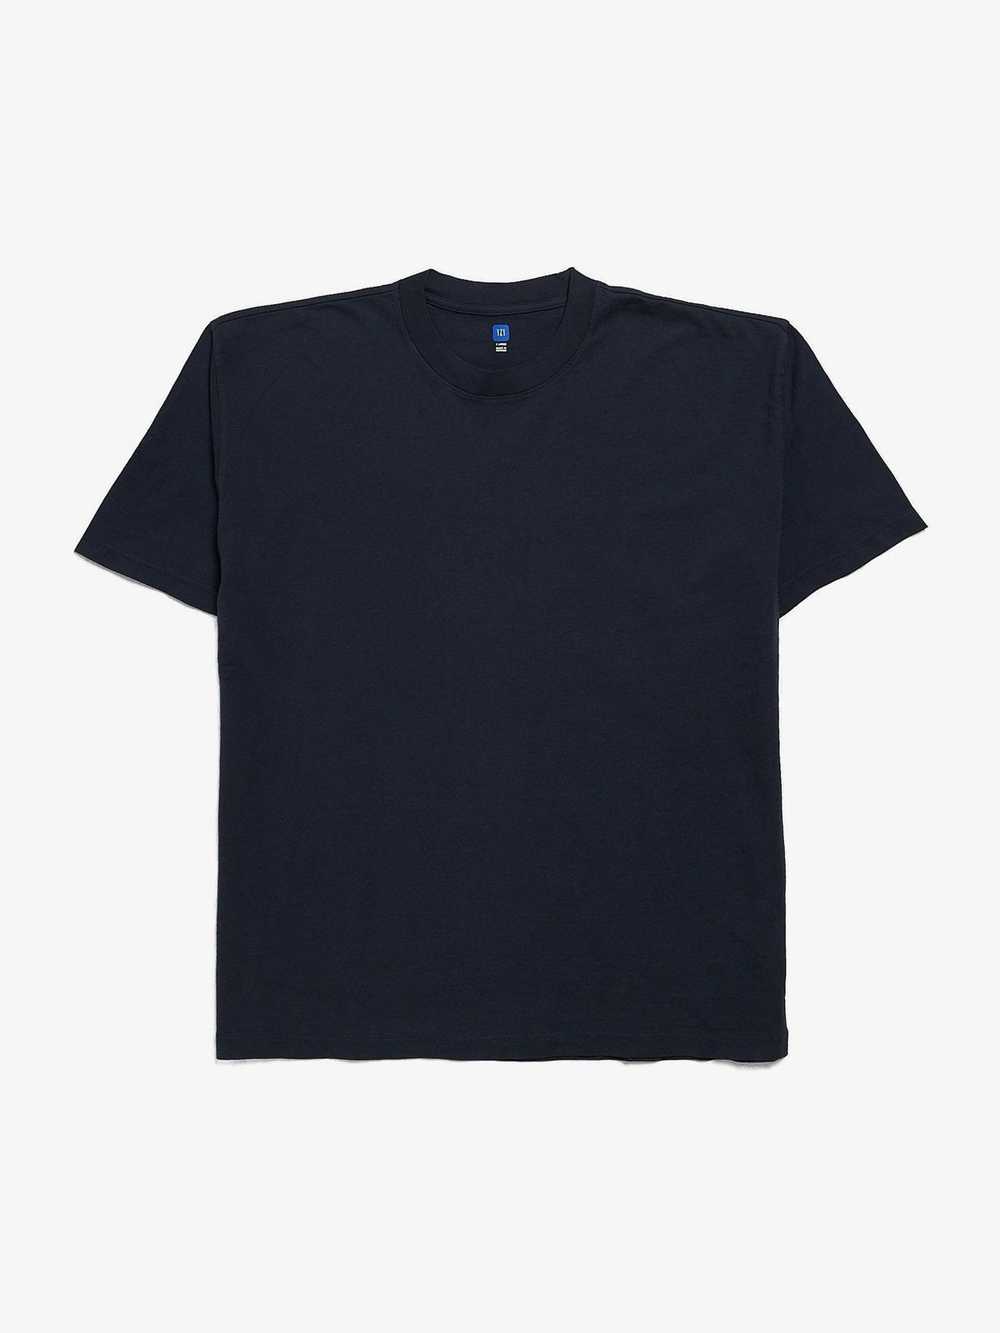 Yeezy Season Navy Oversized T-Shirt - image 1